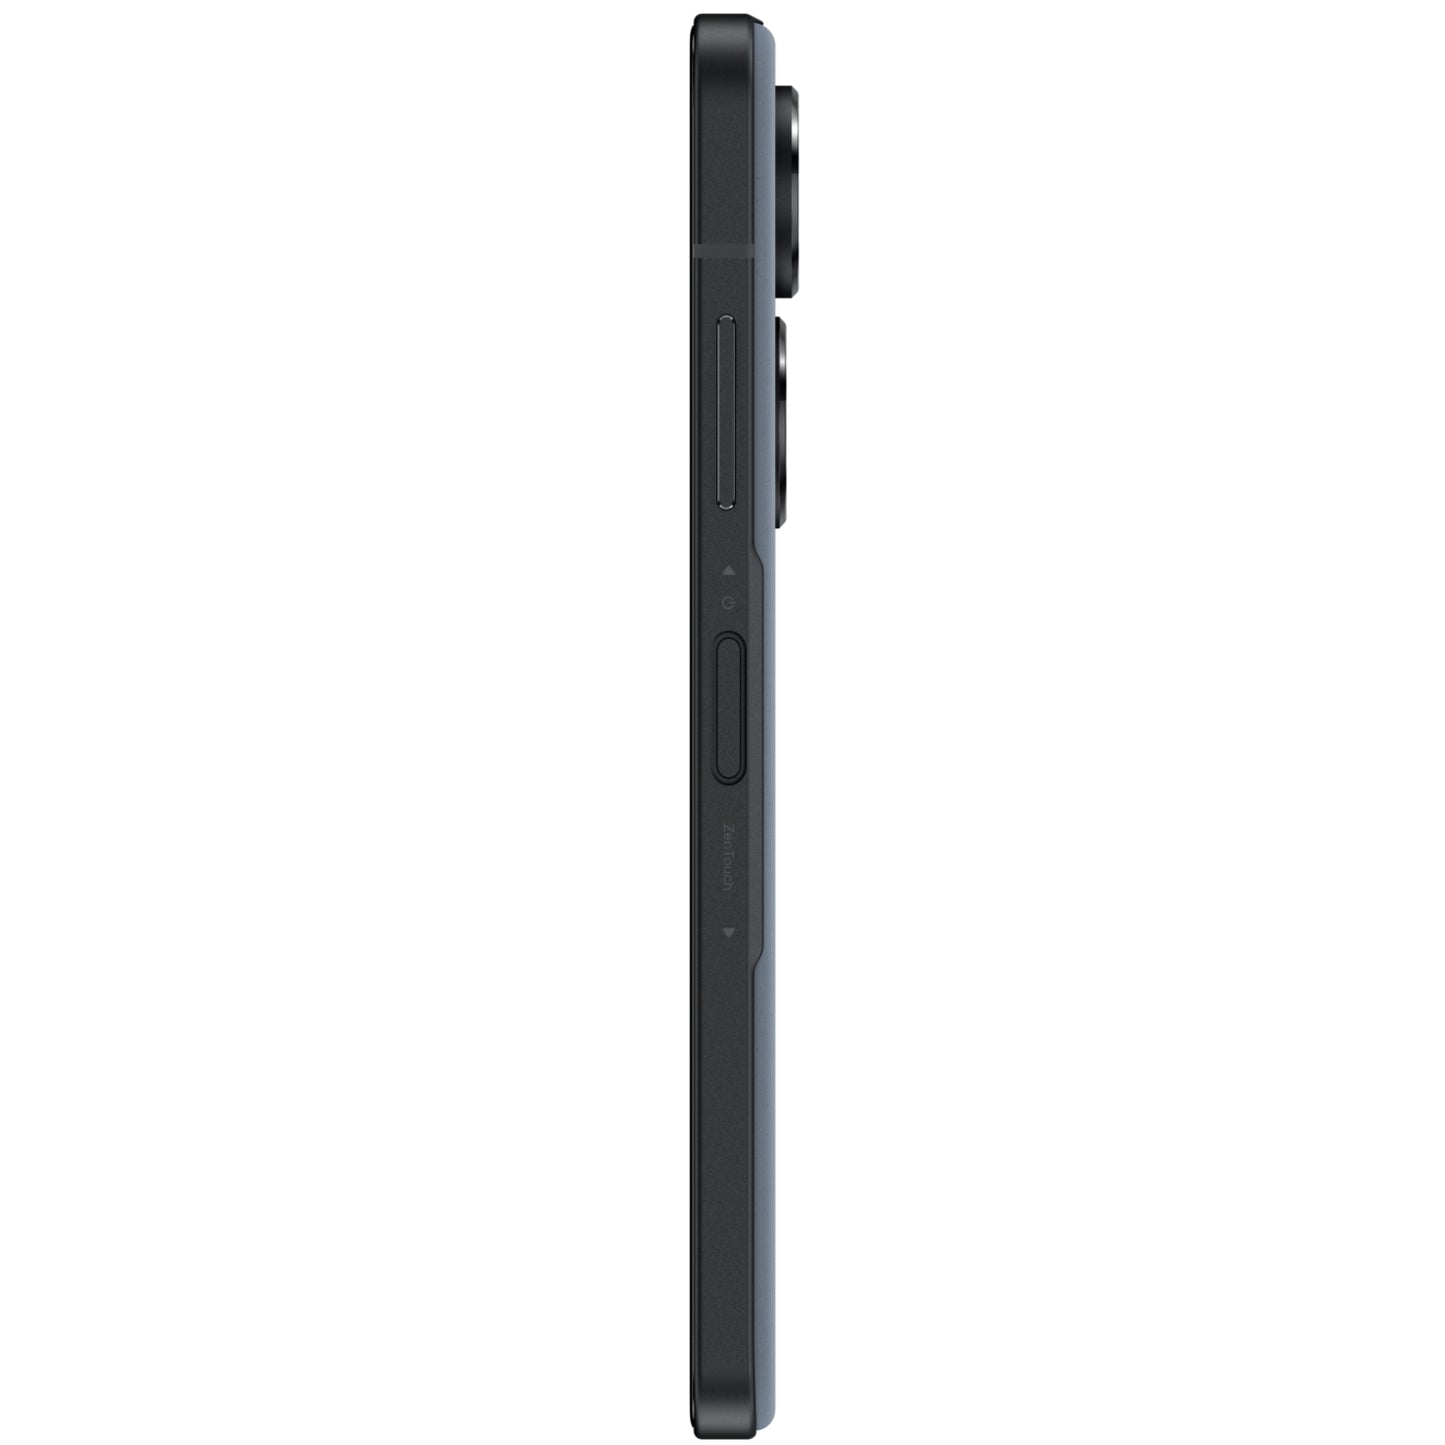 Asus Zenfone 10 Dual Sim AI2302 5G (8GB) - MyMobile